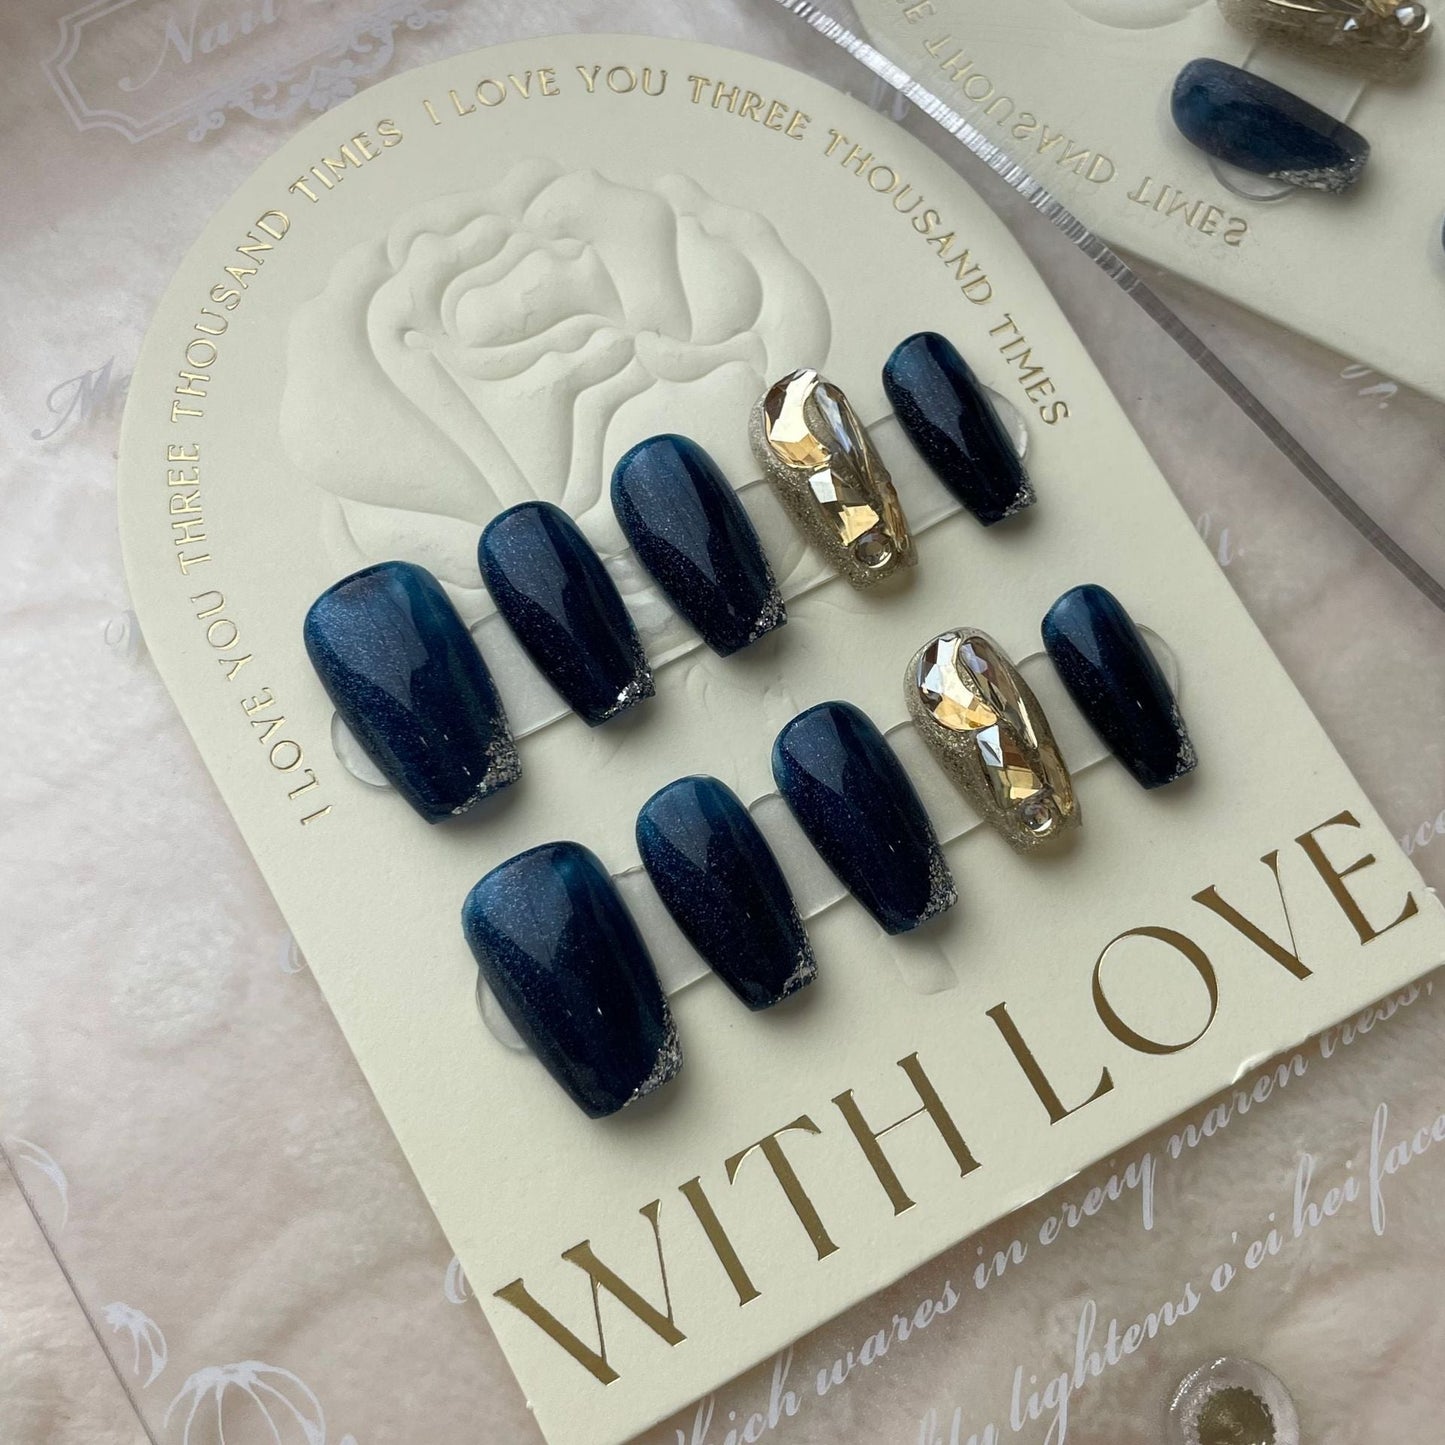 616 London Blue Cateye Effect press-on-nagels 100% handgemaakte kunstnagels blauw